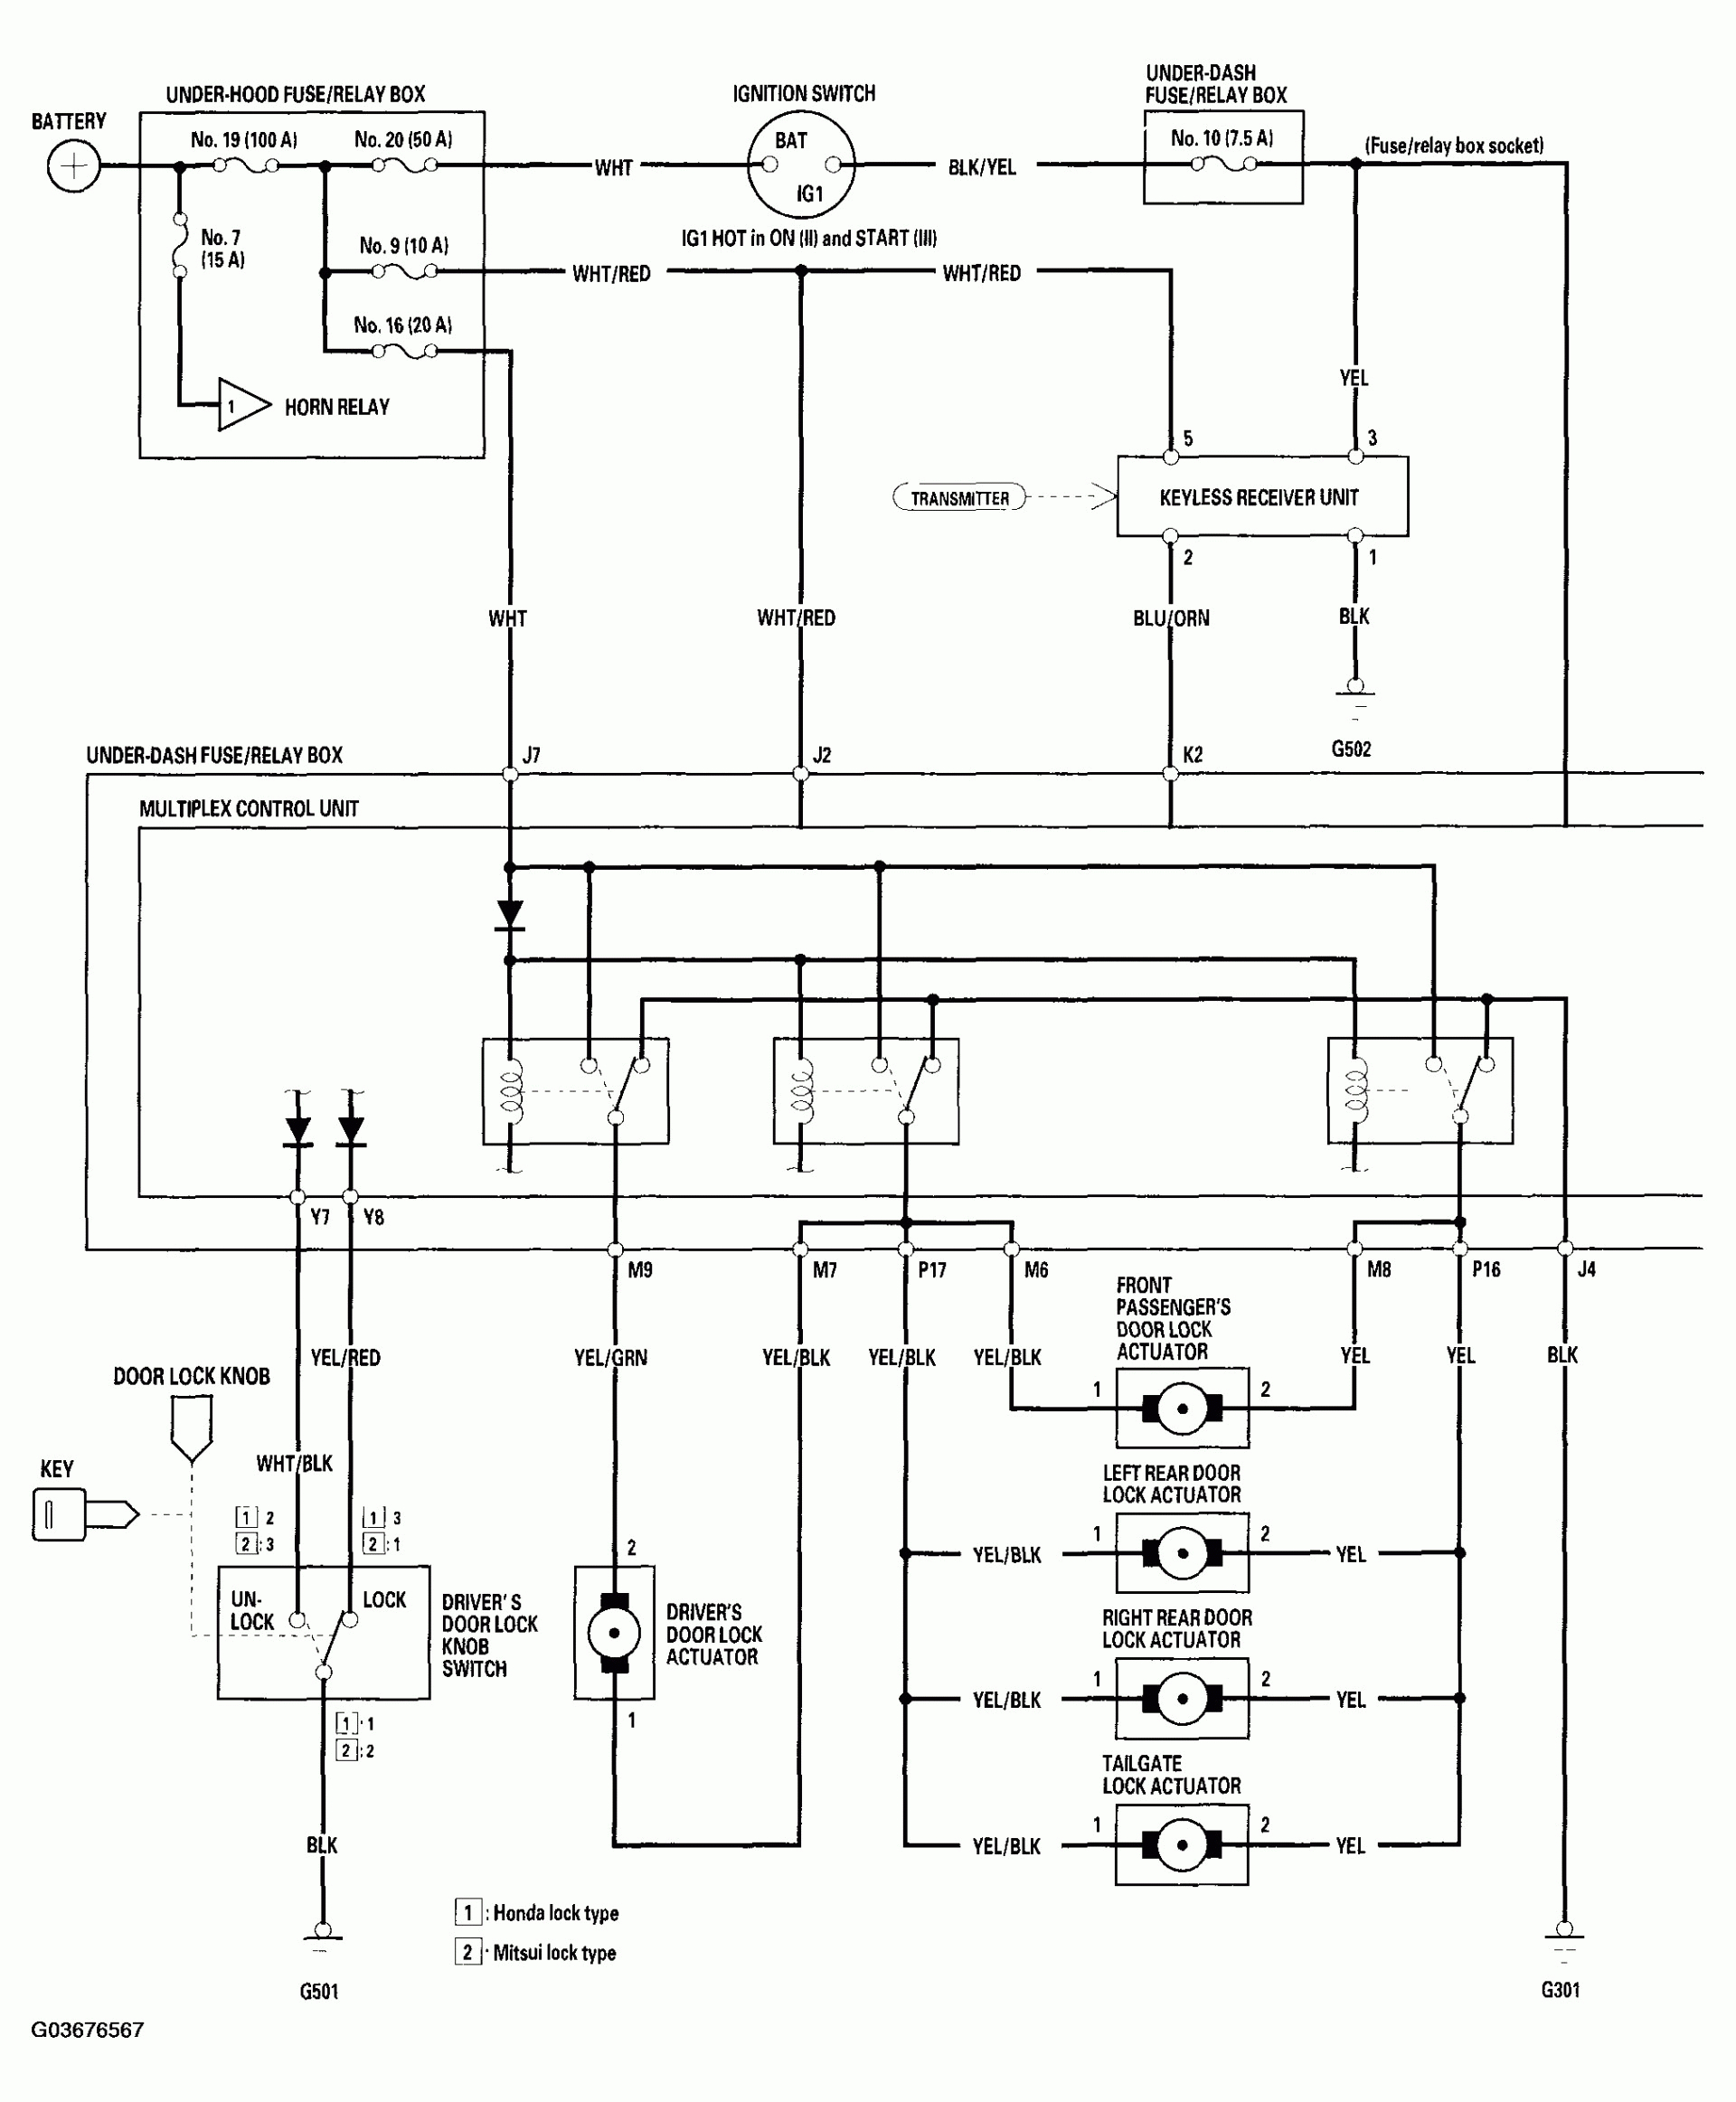 Chevy 4X4 Actuator Wiring Diagram
